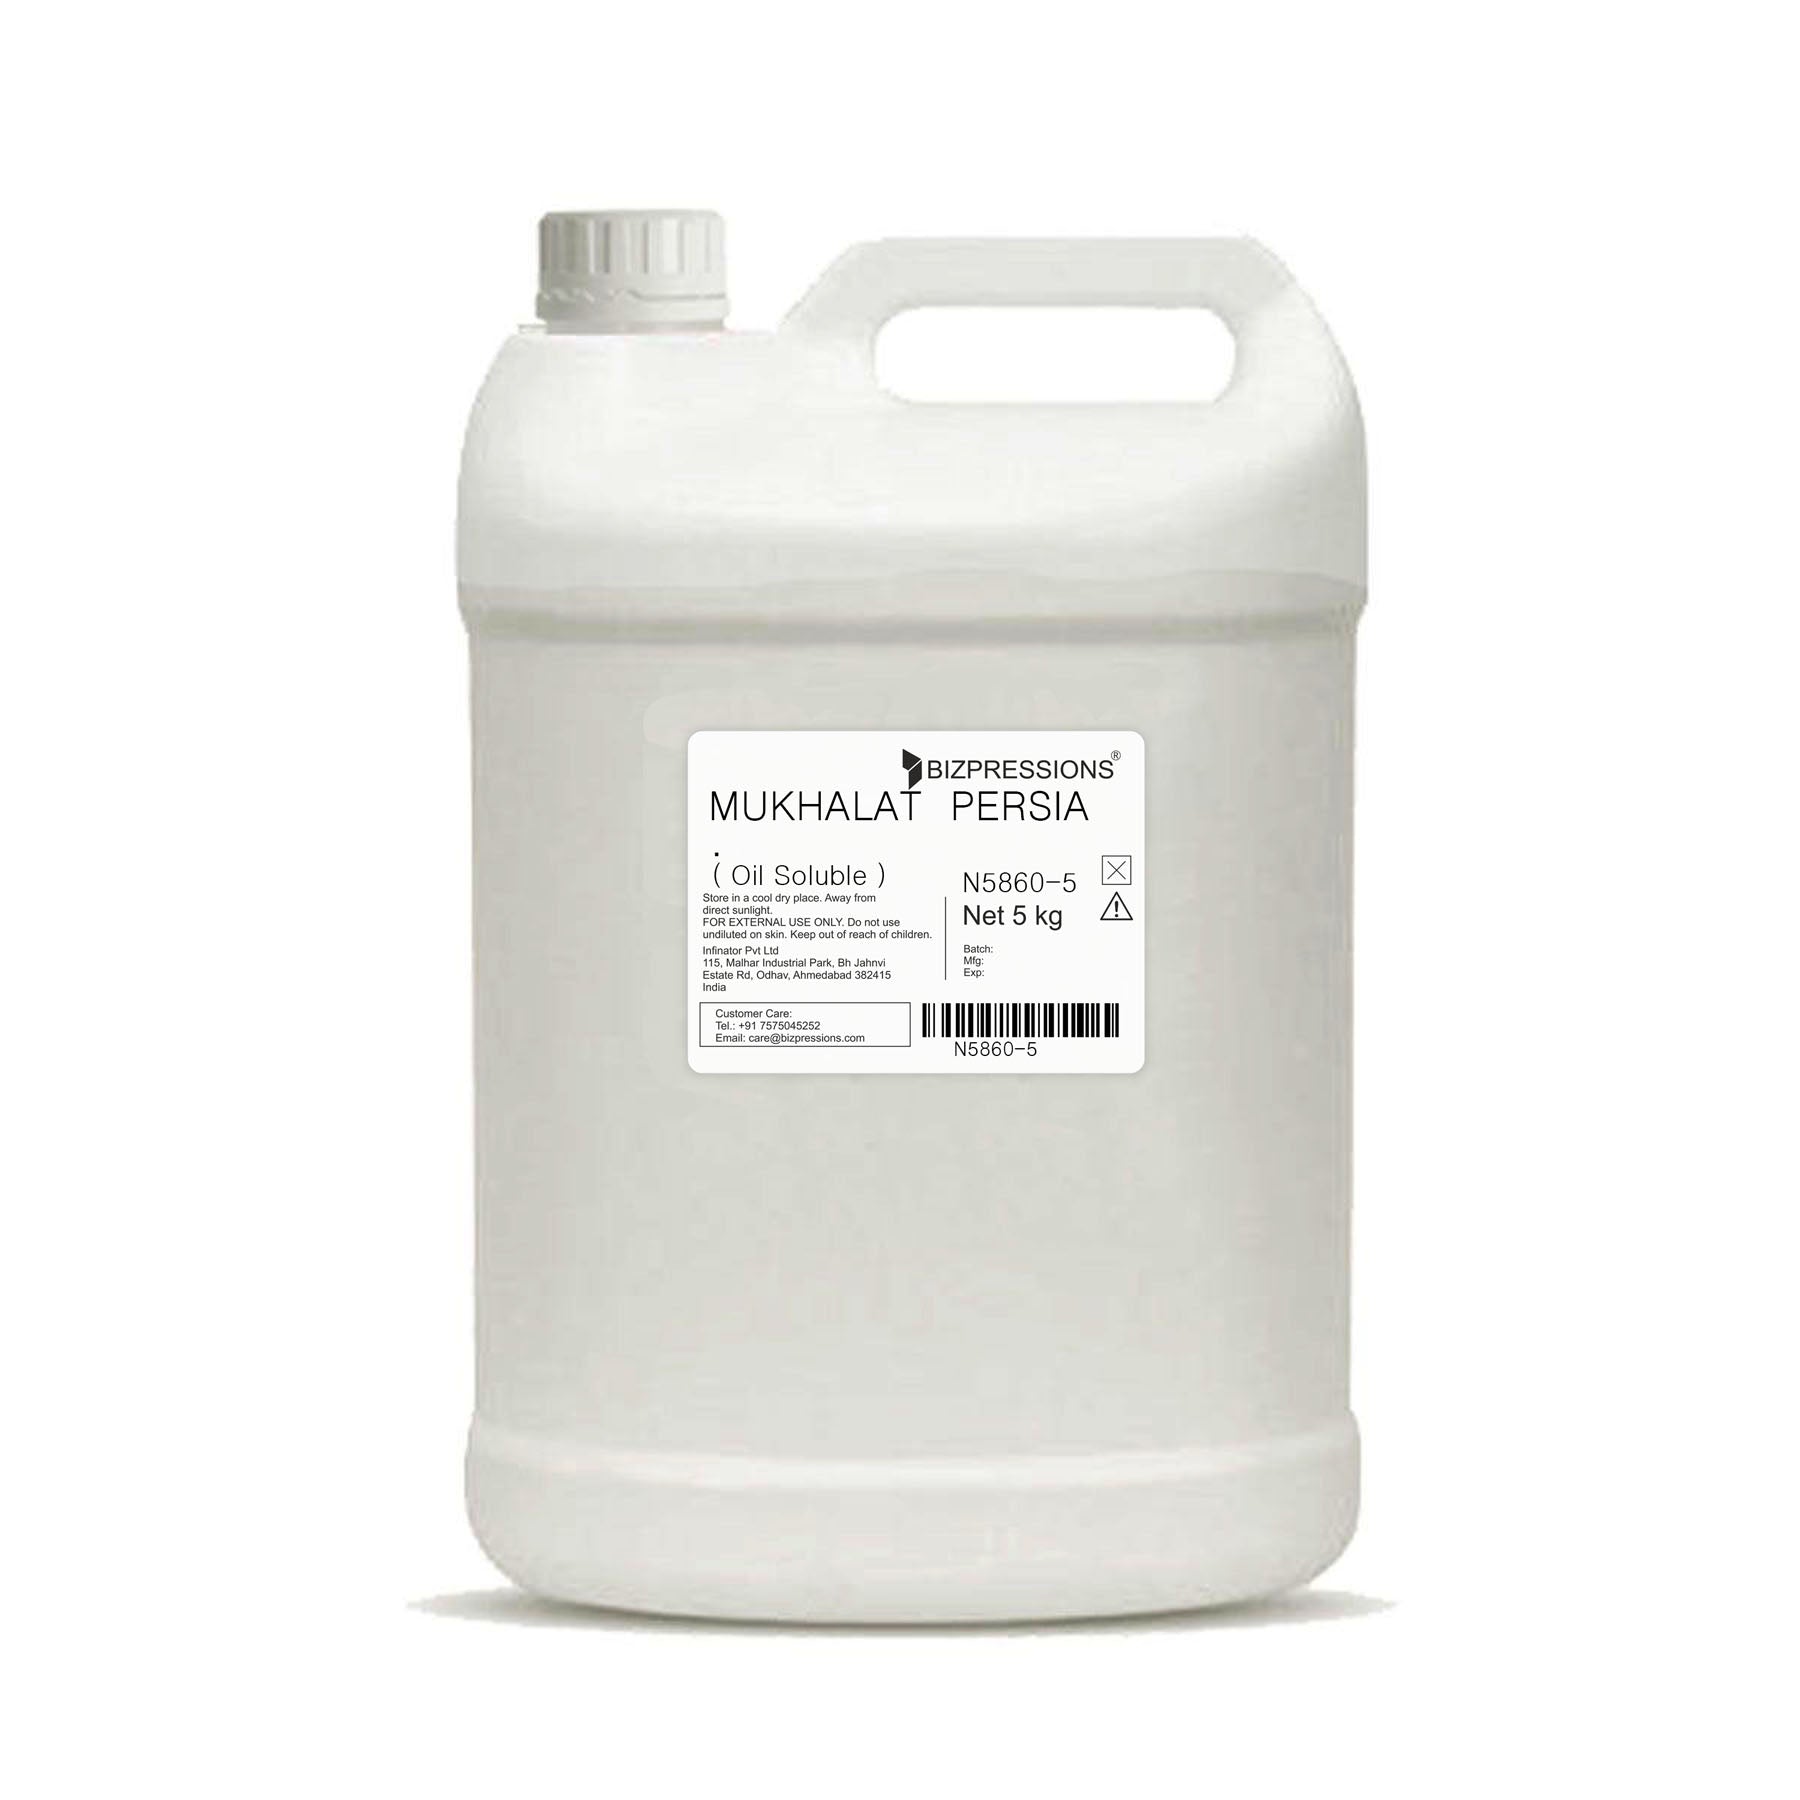 MUKHALAT PERSIA - Fragrance ( Oil Soluble ) - 5 kg